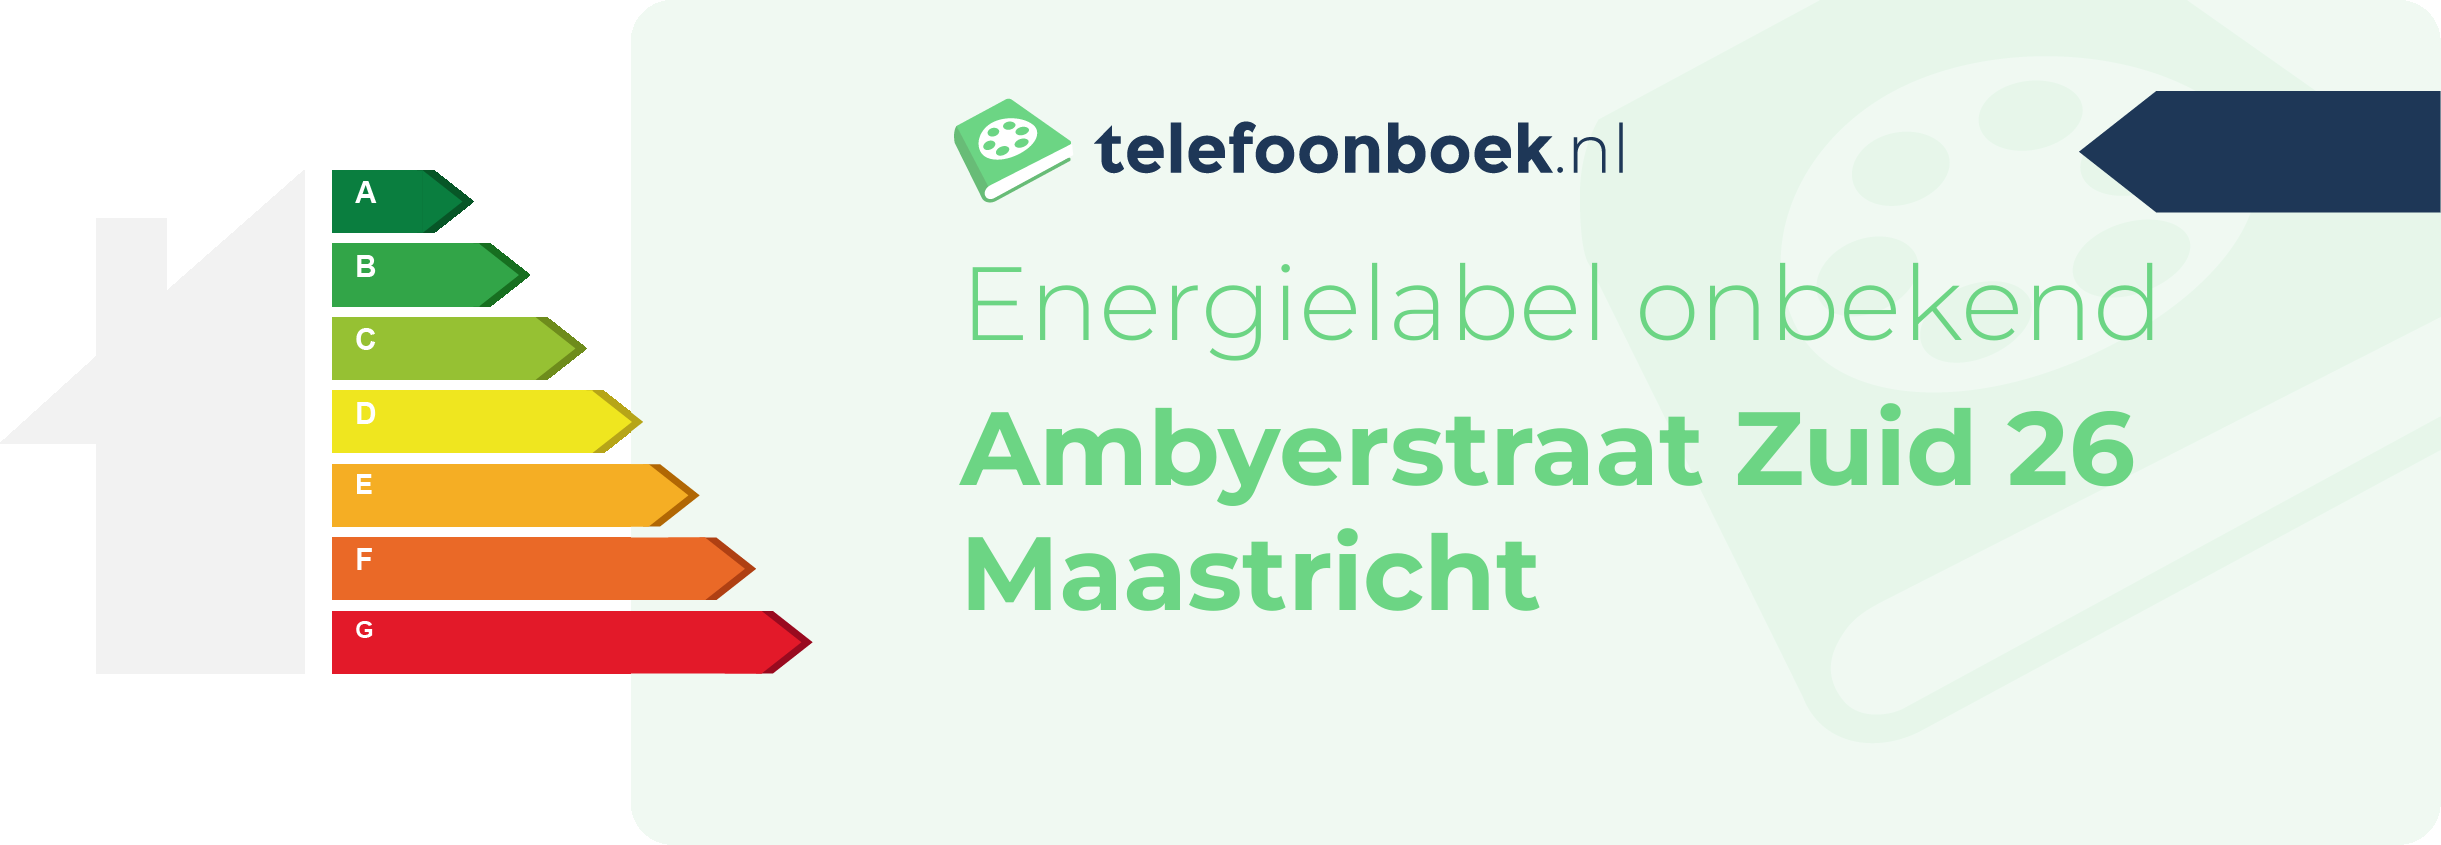 Energielabel Ambyerstraat Zuid 26 Maastricht